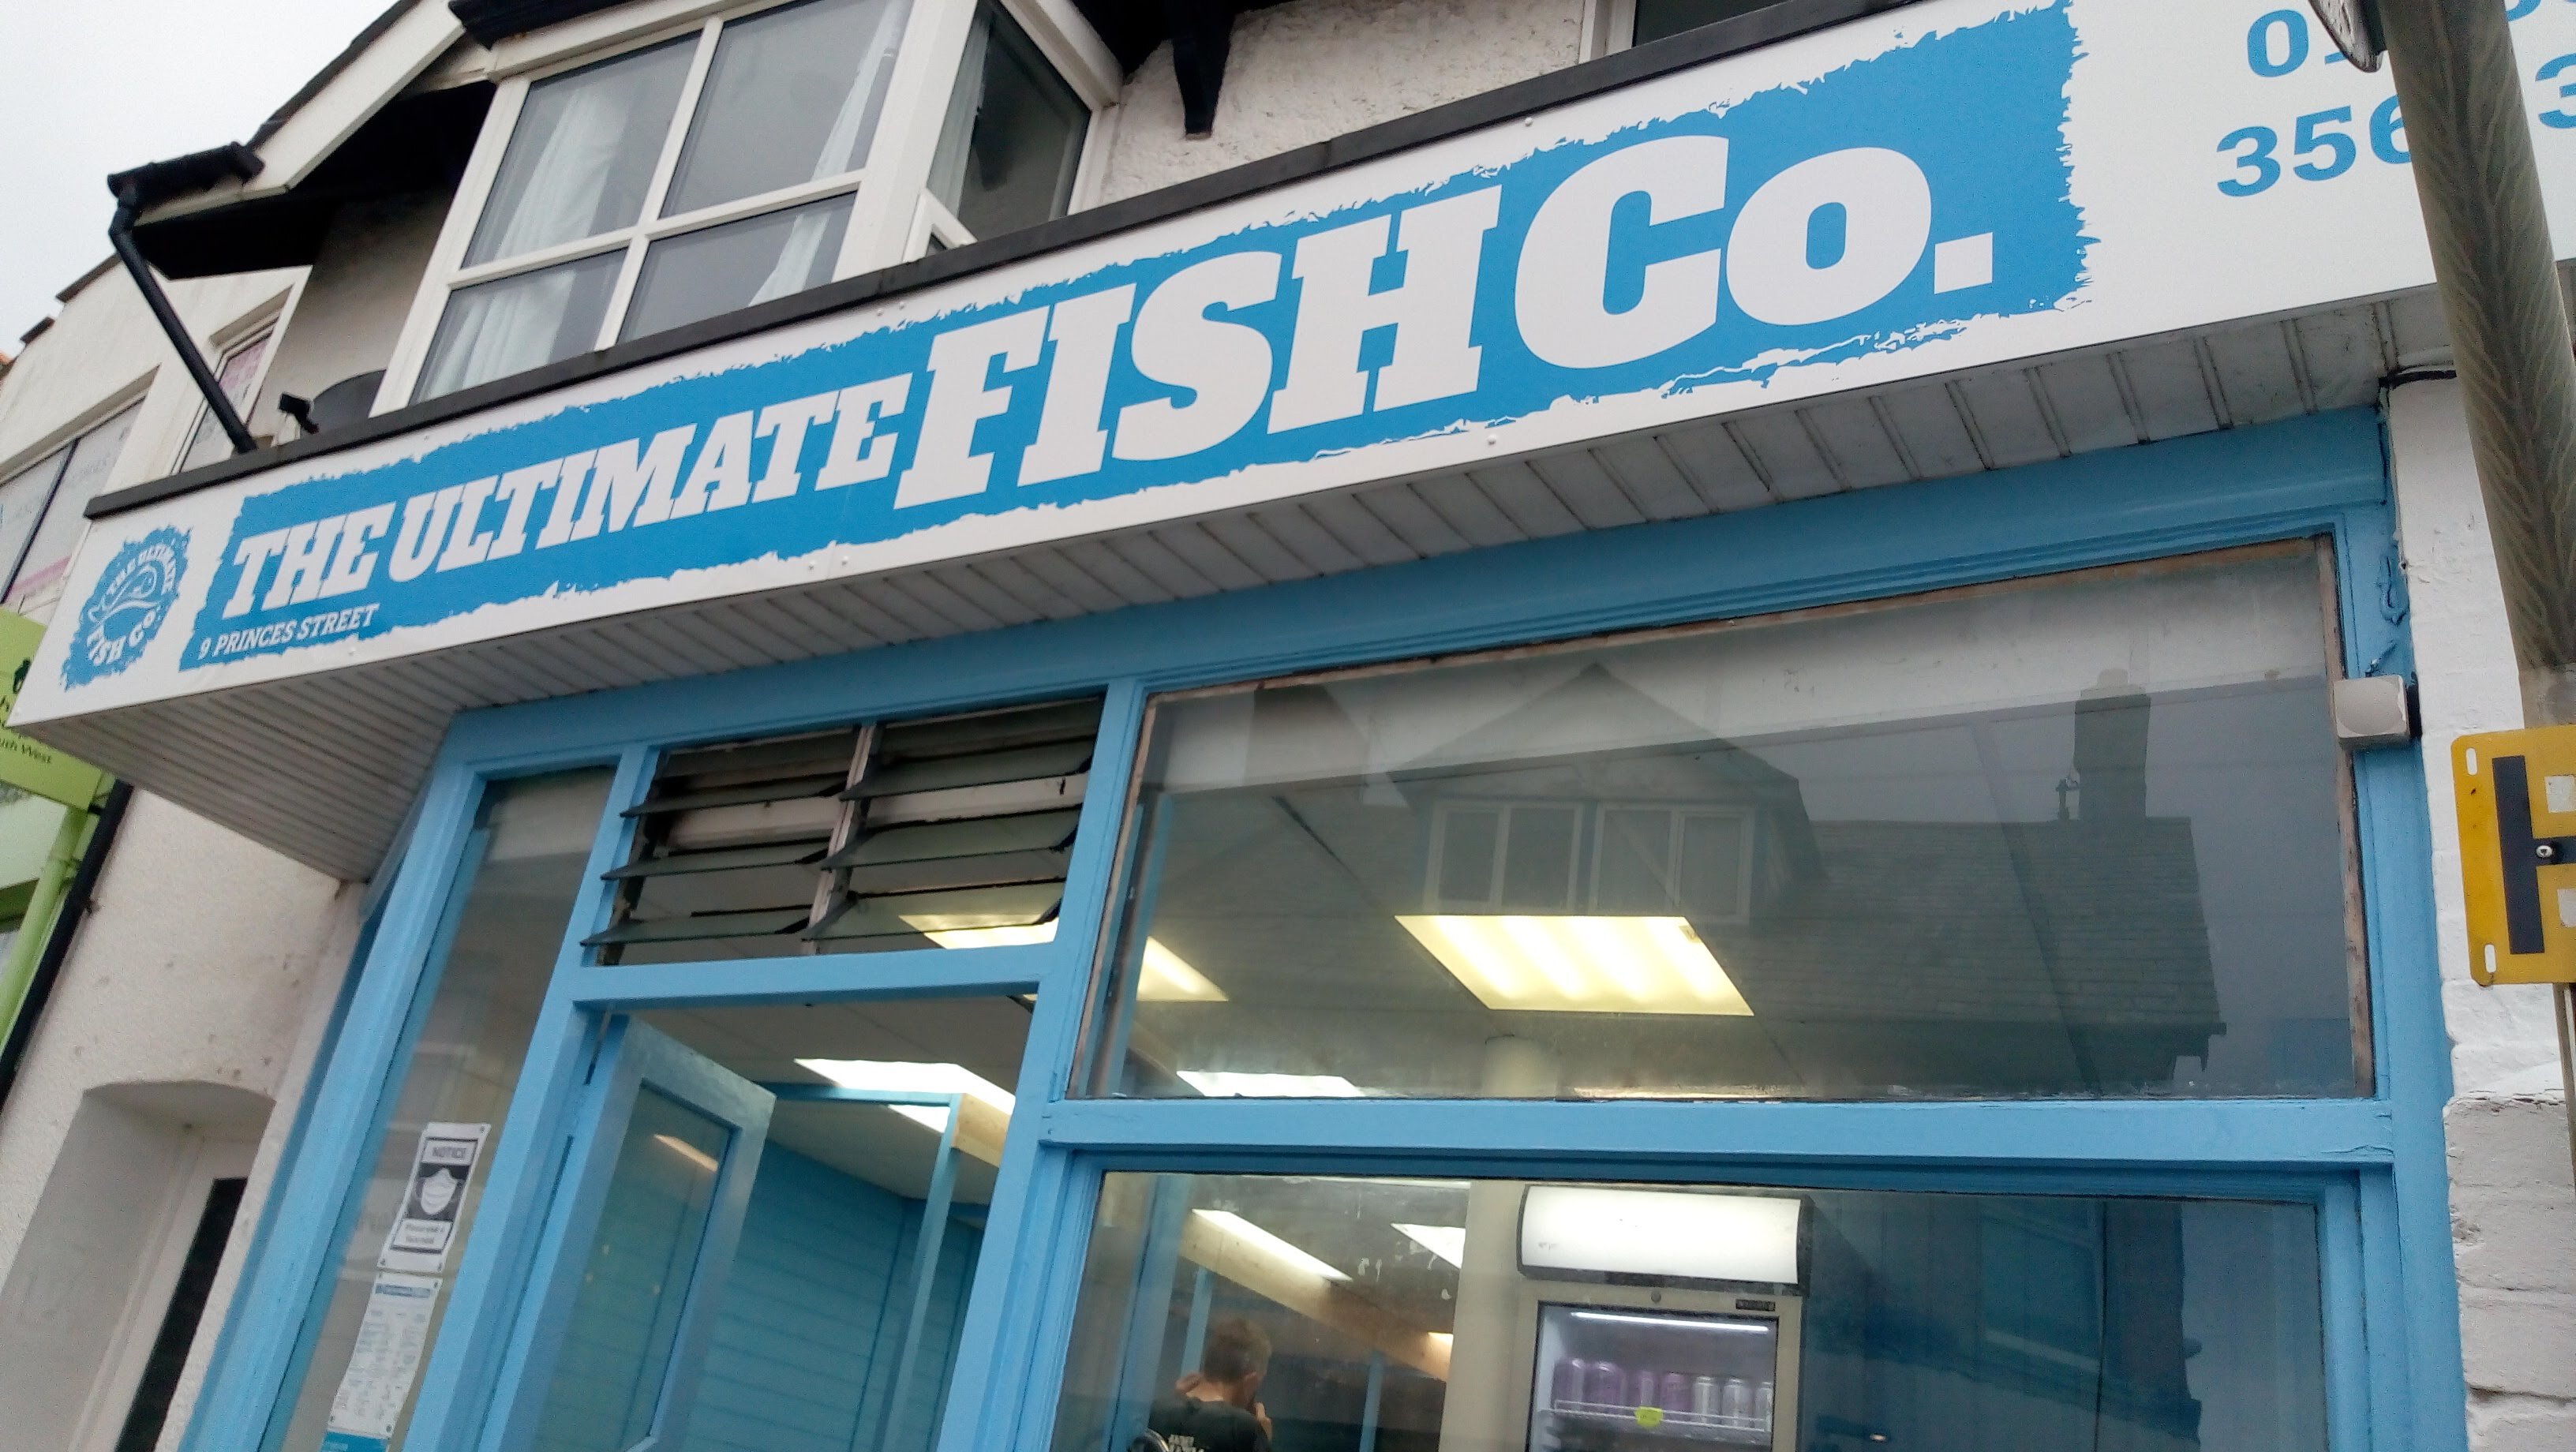 Ultimate Fish Company Ltd